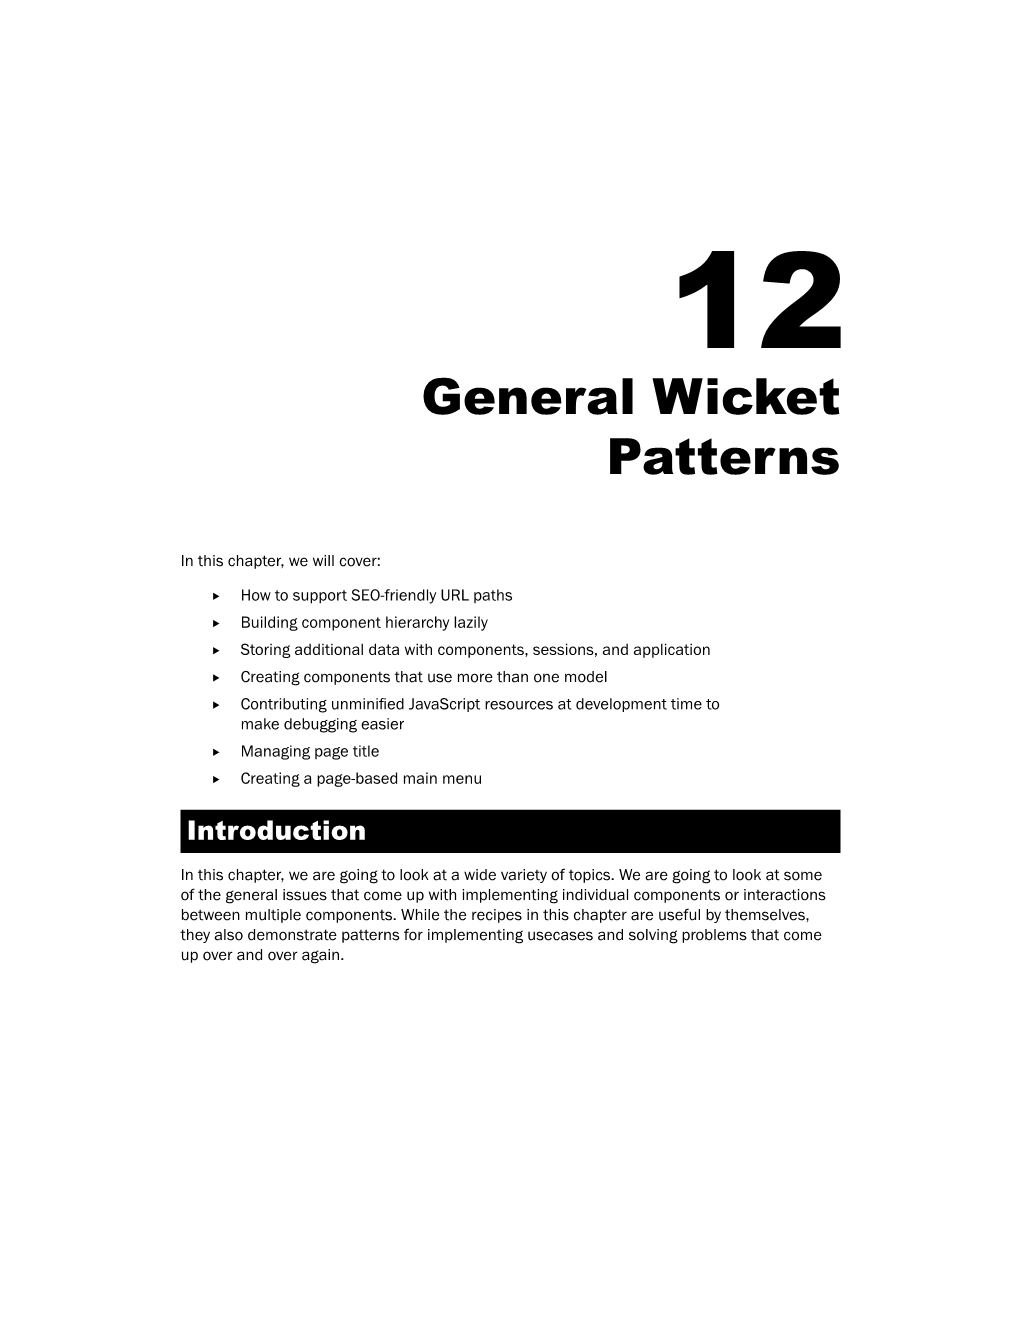 General Wicket Patterns